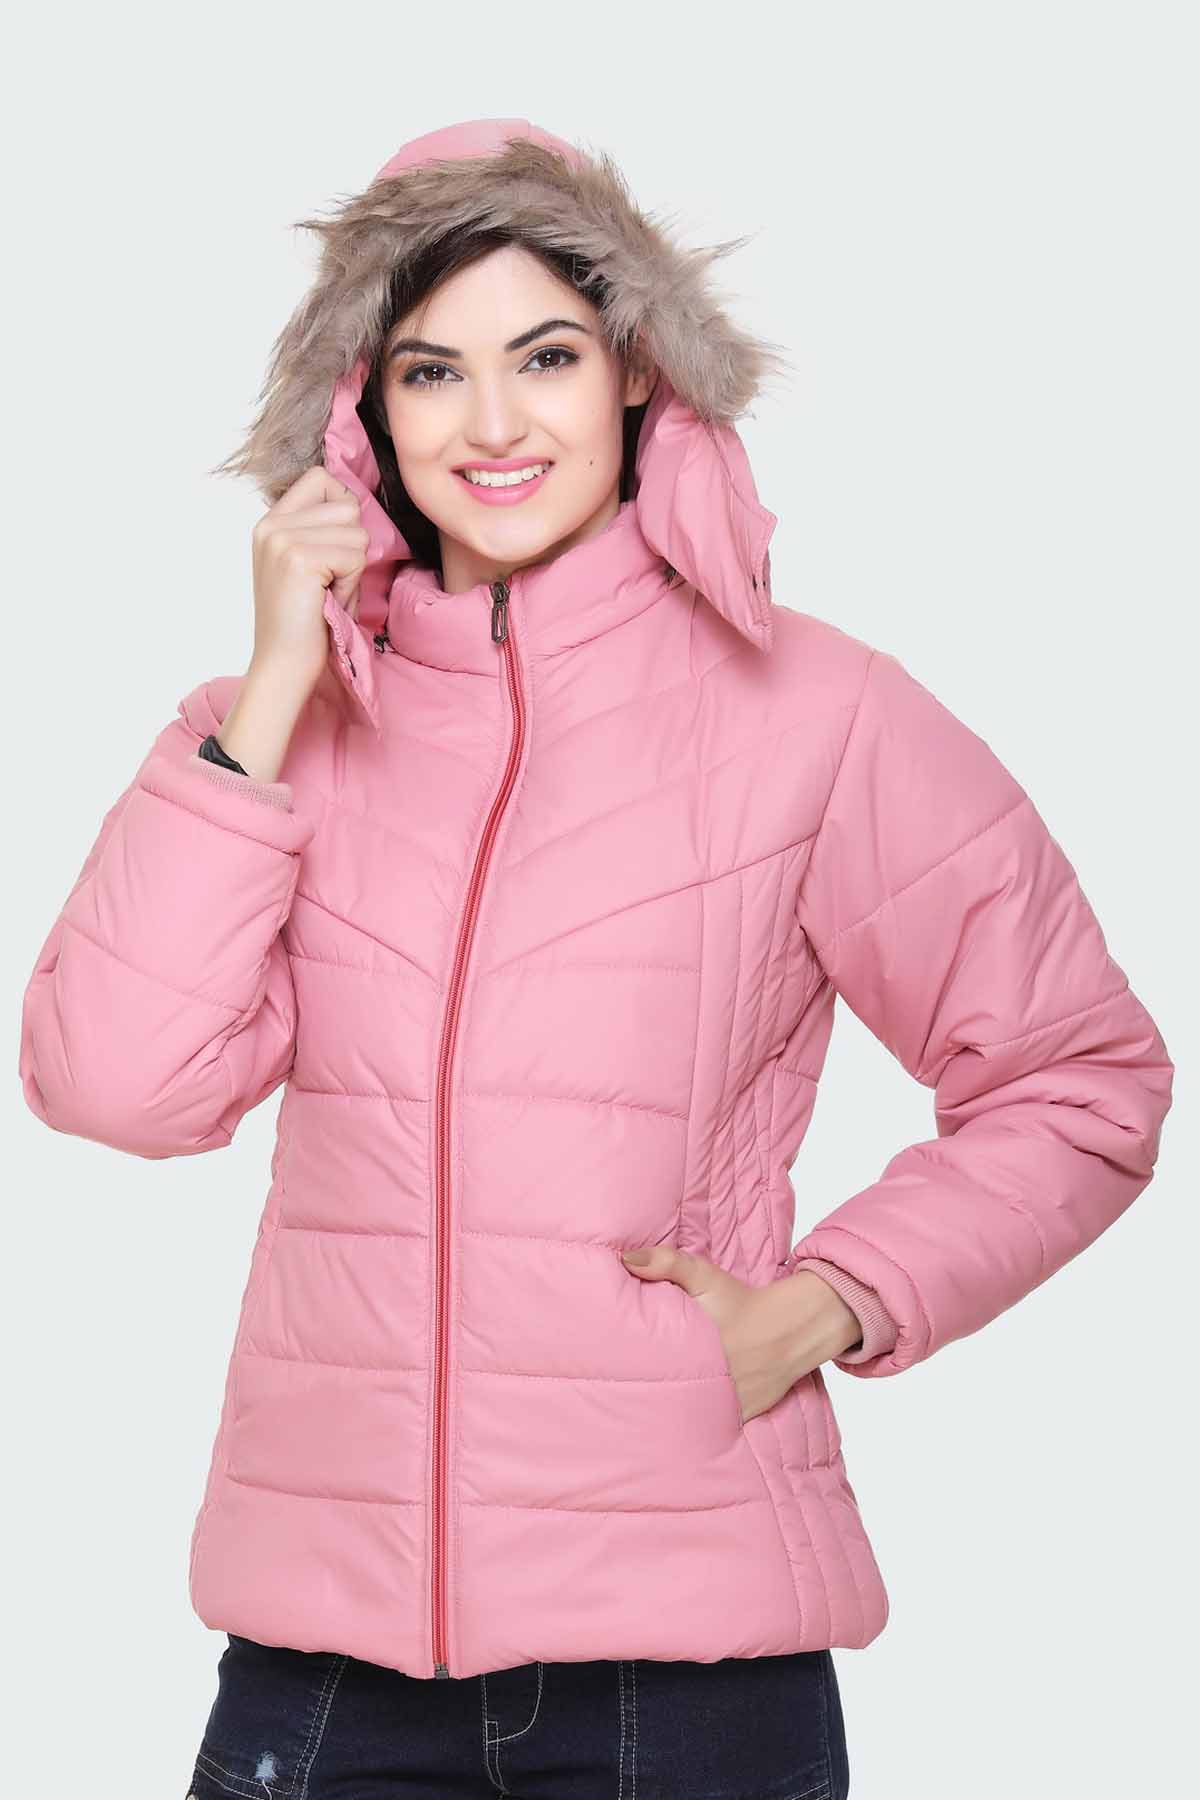 White Moon Nylon Winter Zipper Hood Ladies Jacket (Pink)